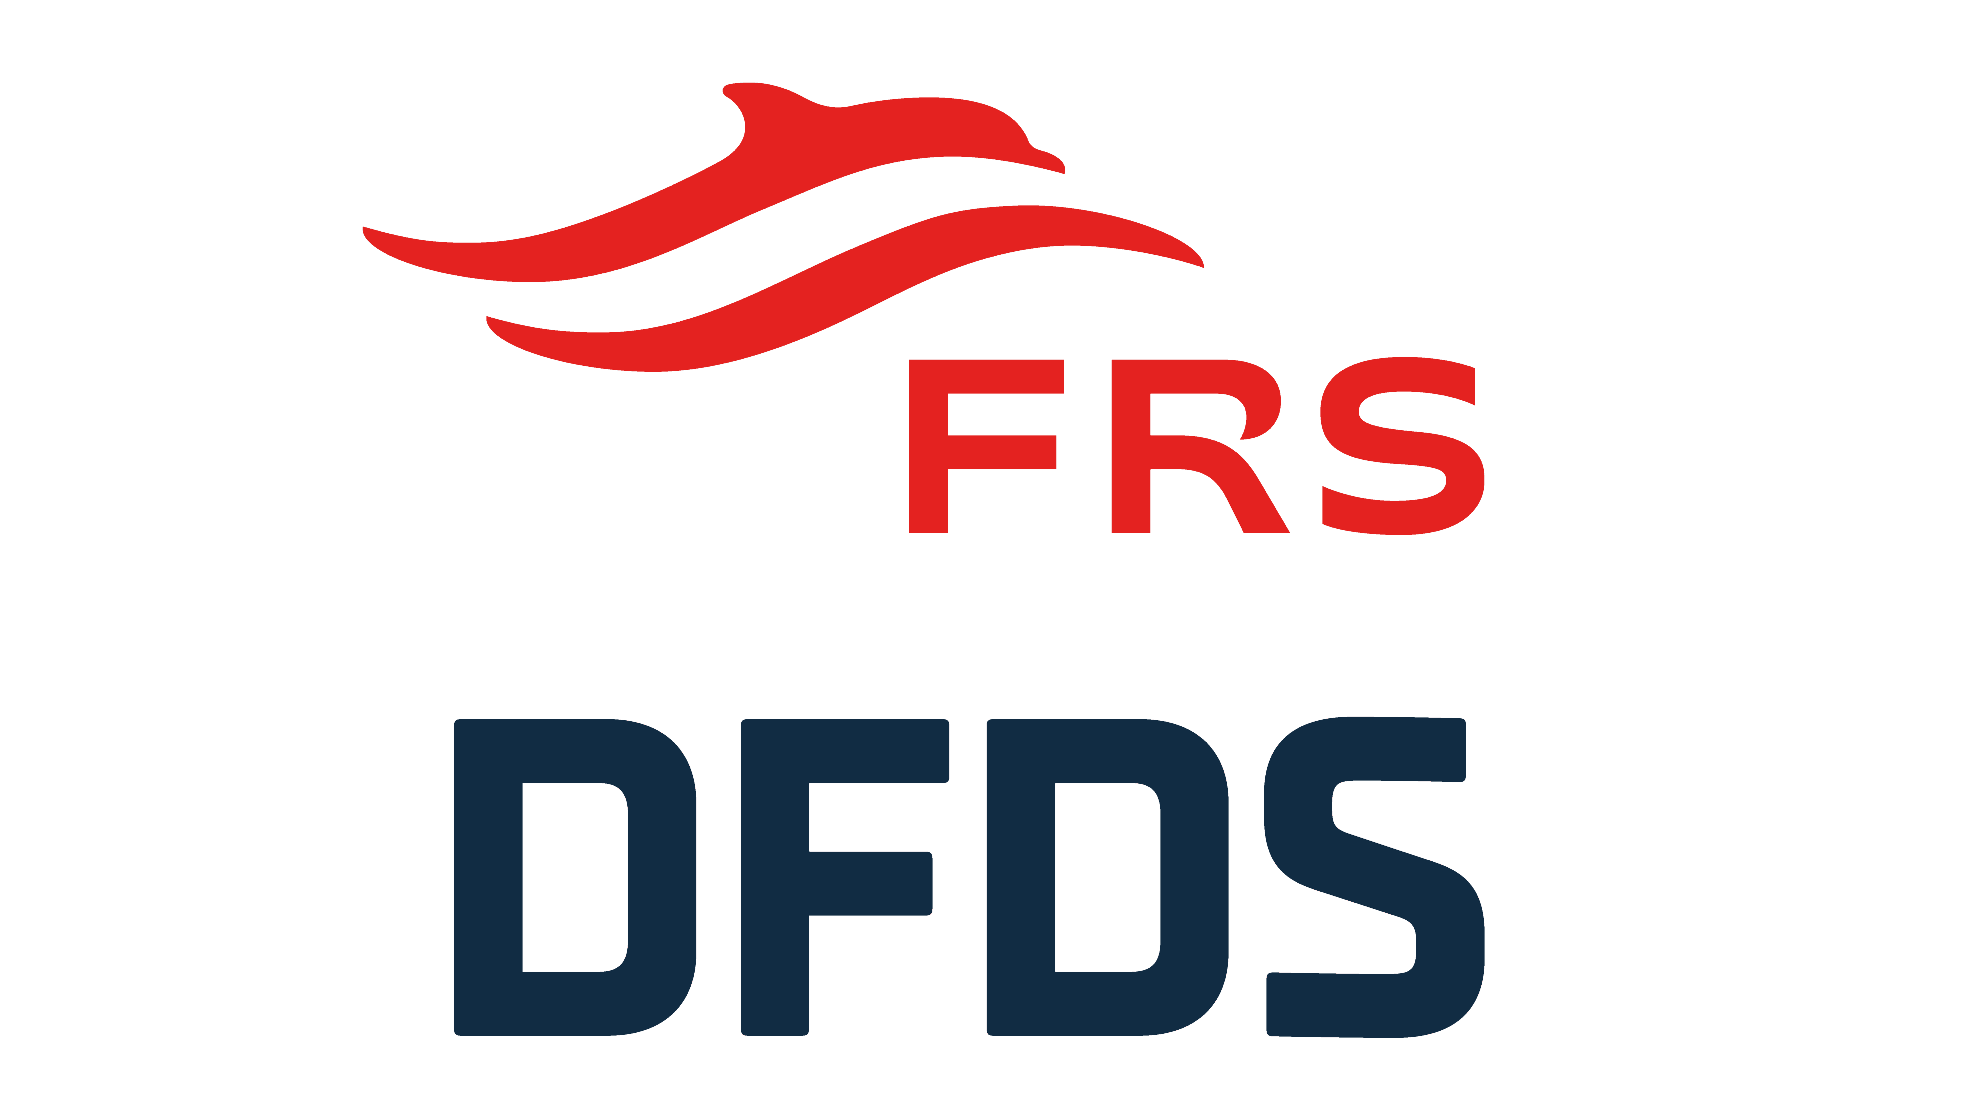 Logo FRS